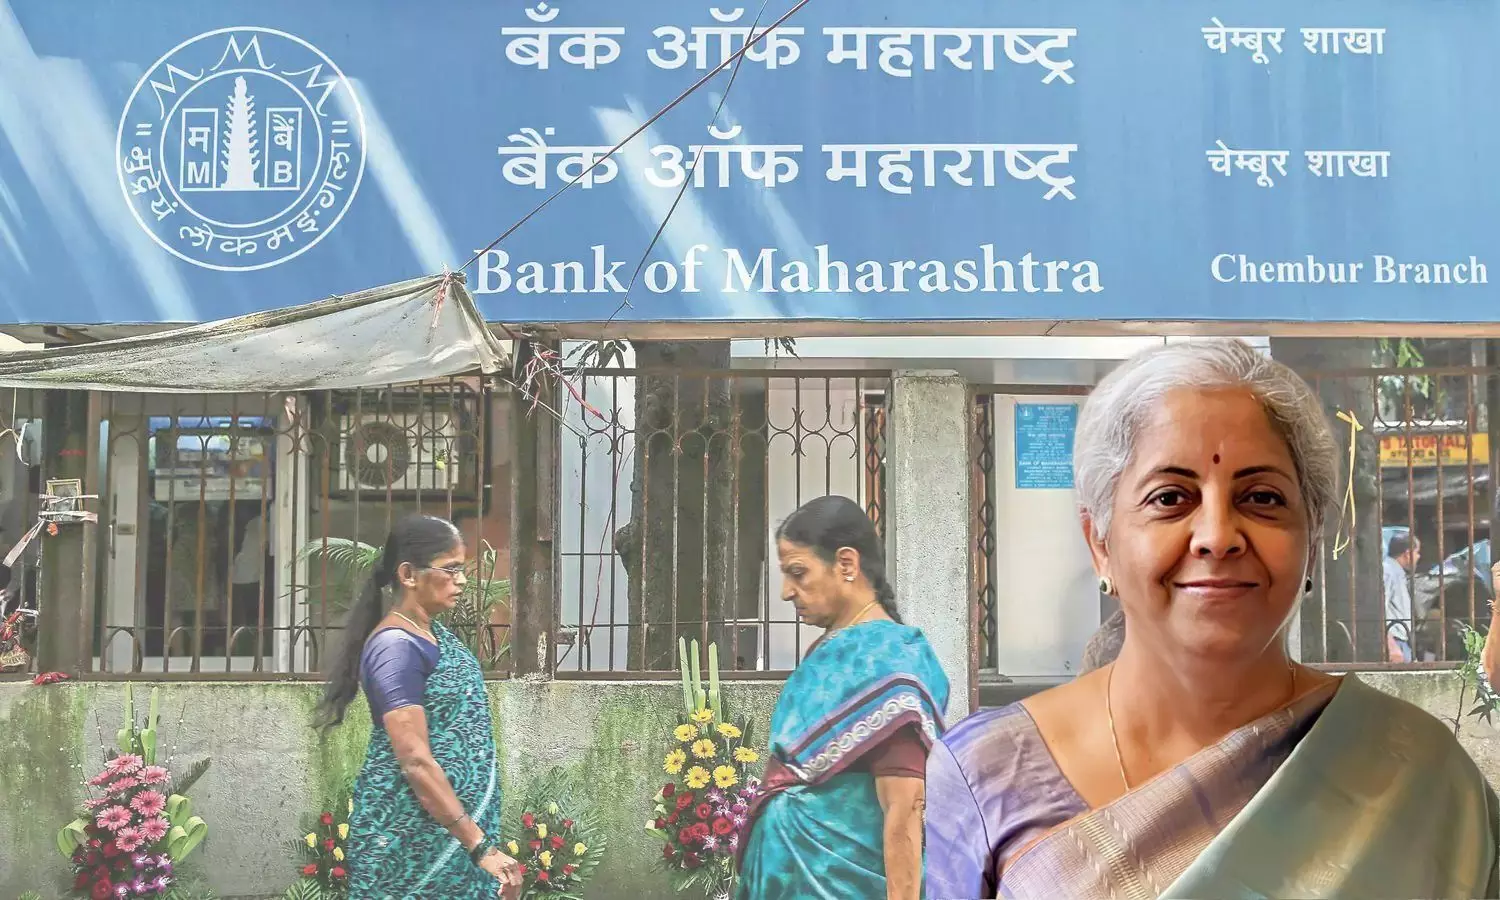 Bank of Maharashtra, Nirmala Sitharaman